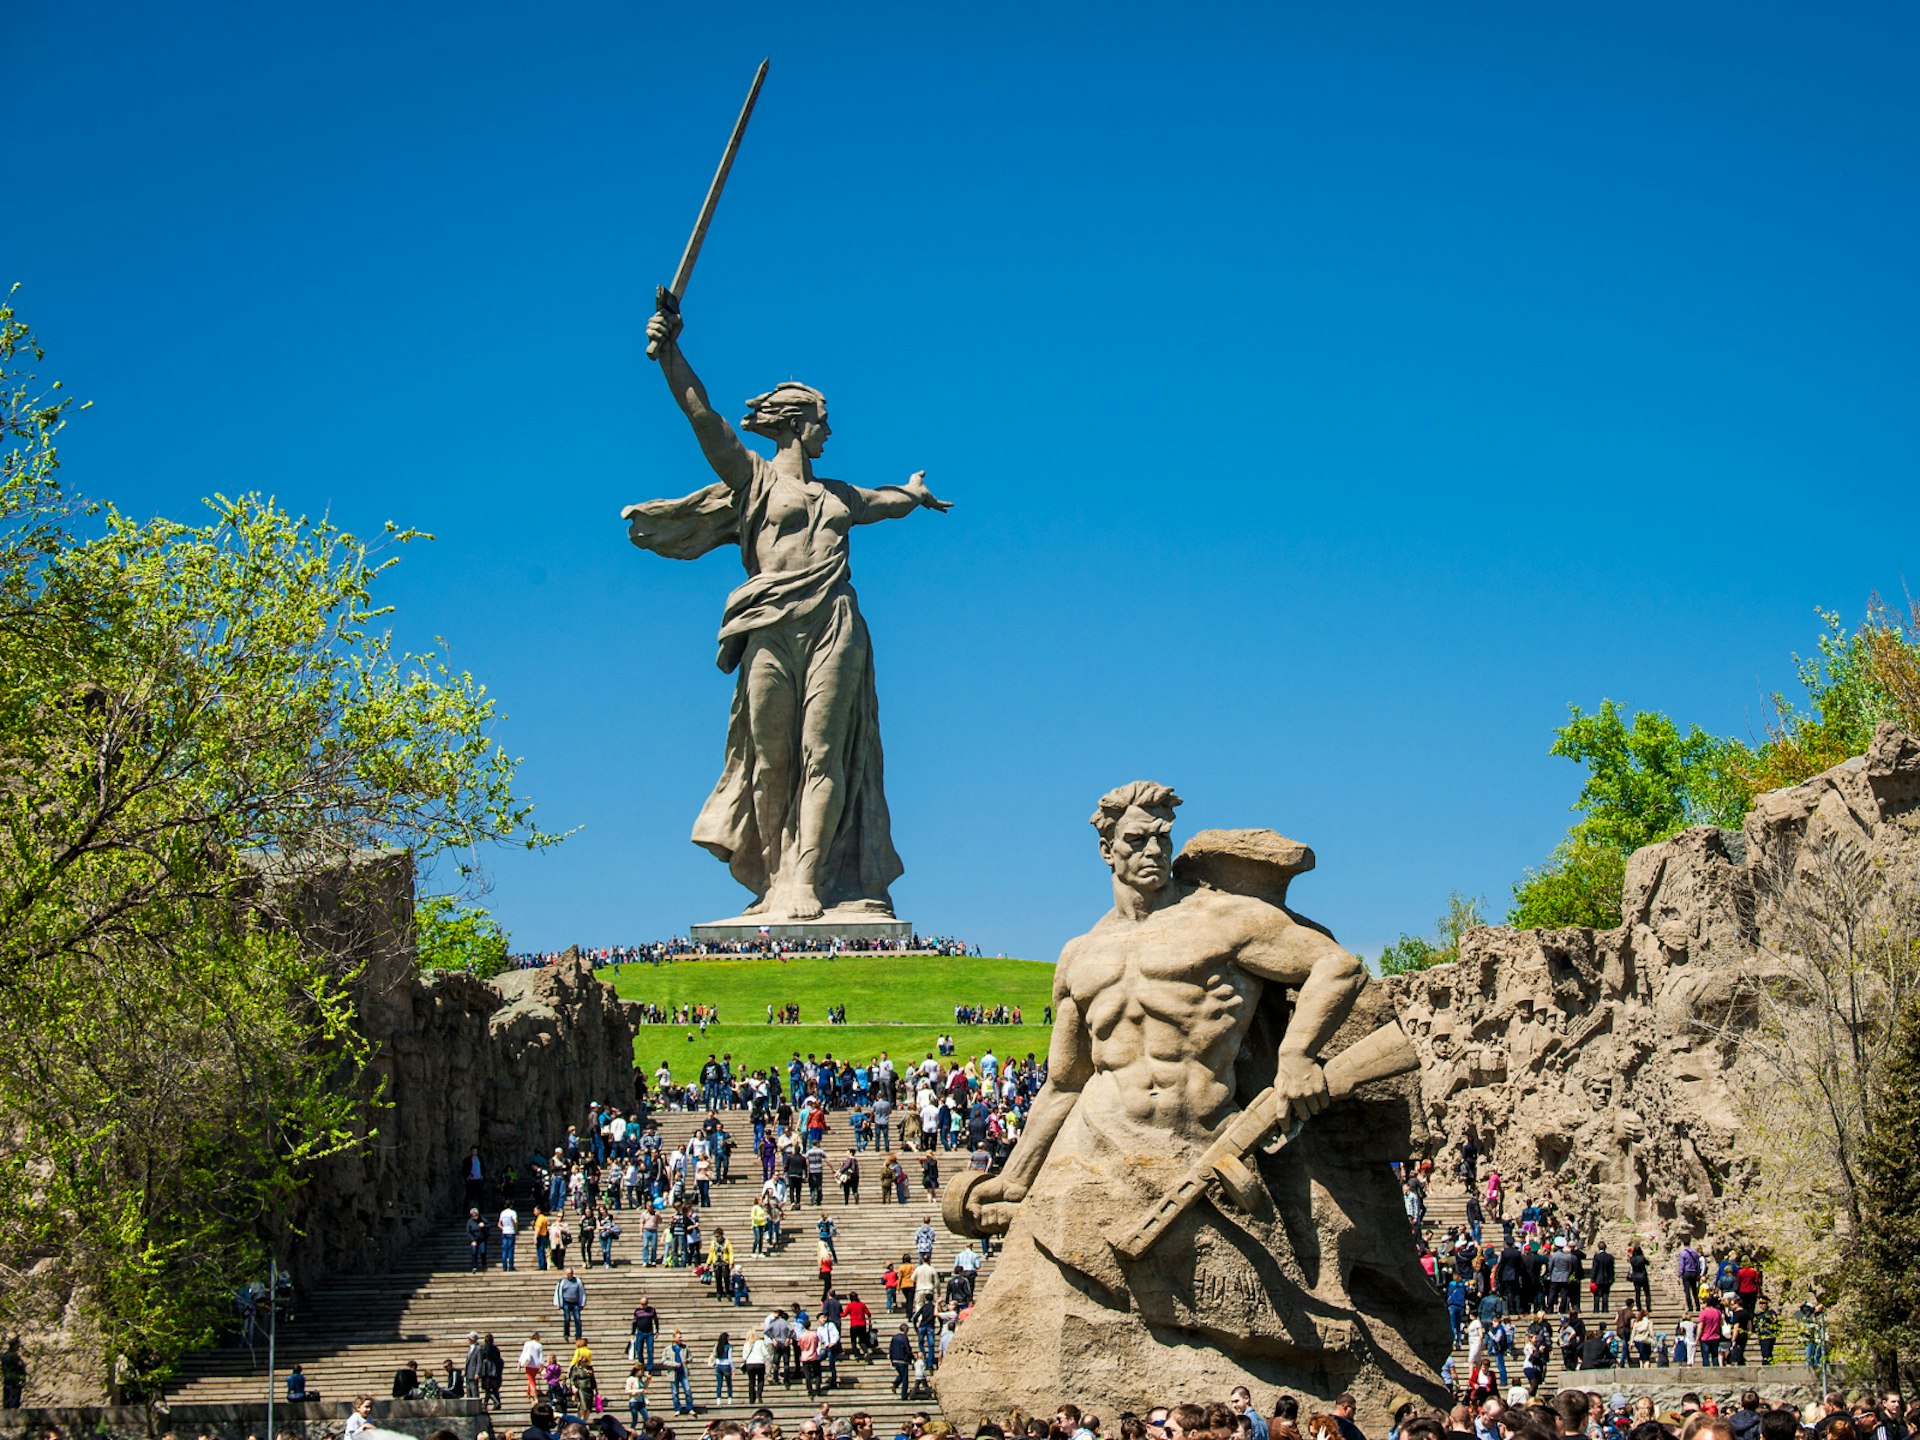 Mother Russia statue dominates Mamaev Kurgan complex in Volgograd © Ev. Safronov / Shutterstock